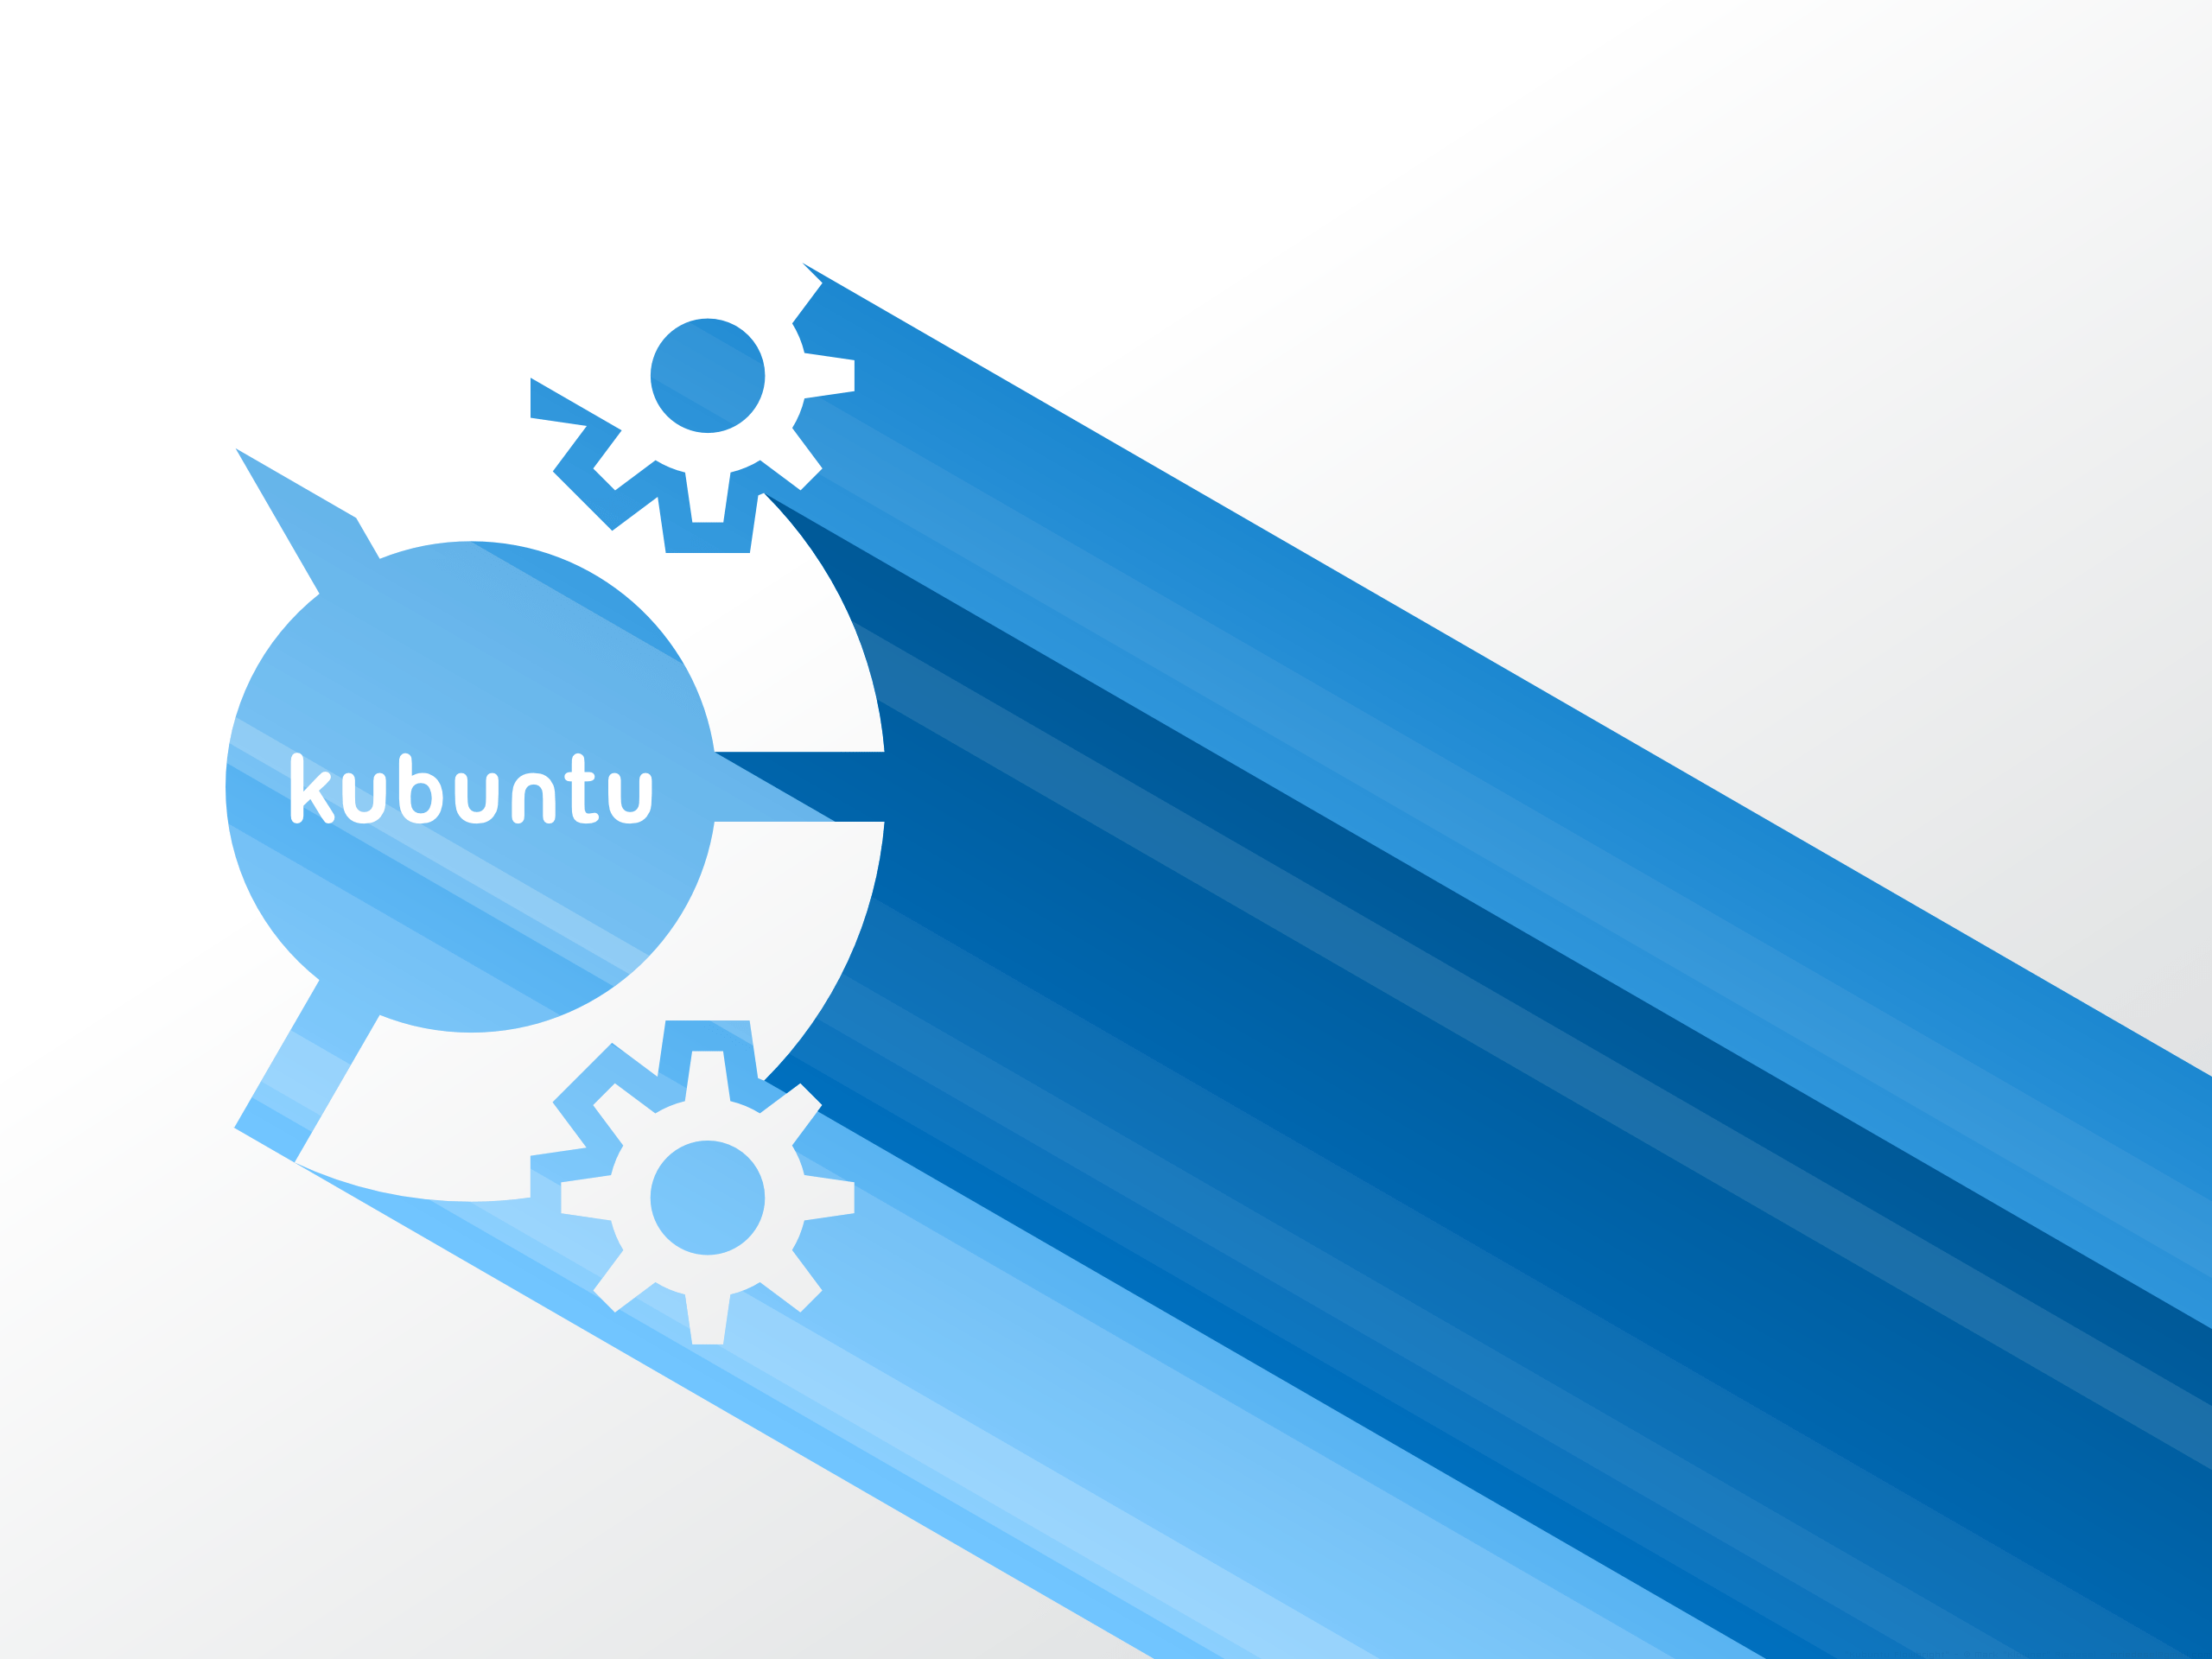 Flowbright Kubuntu" wallpaper at klowner